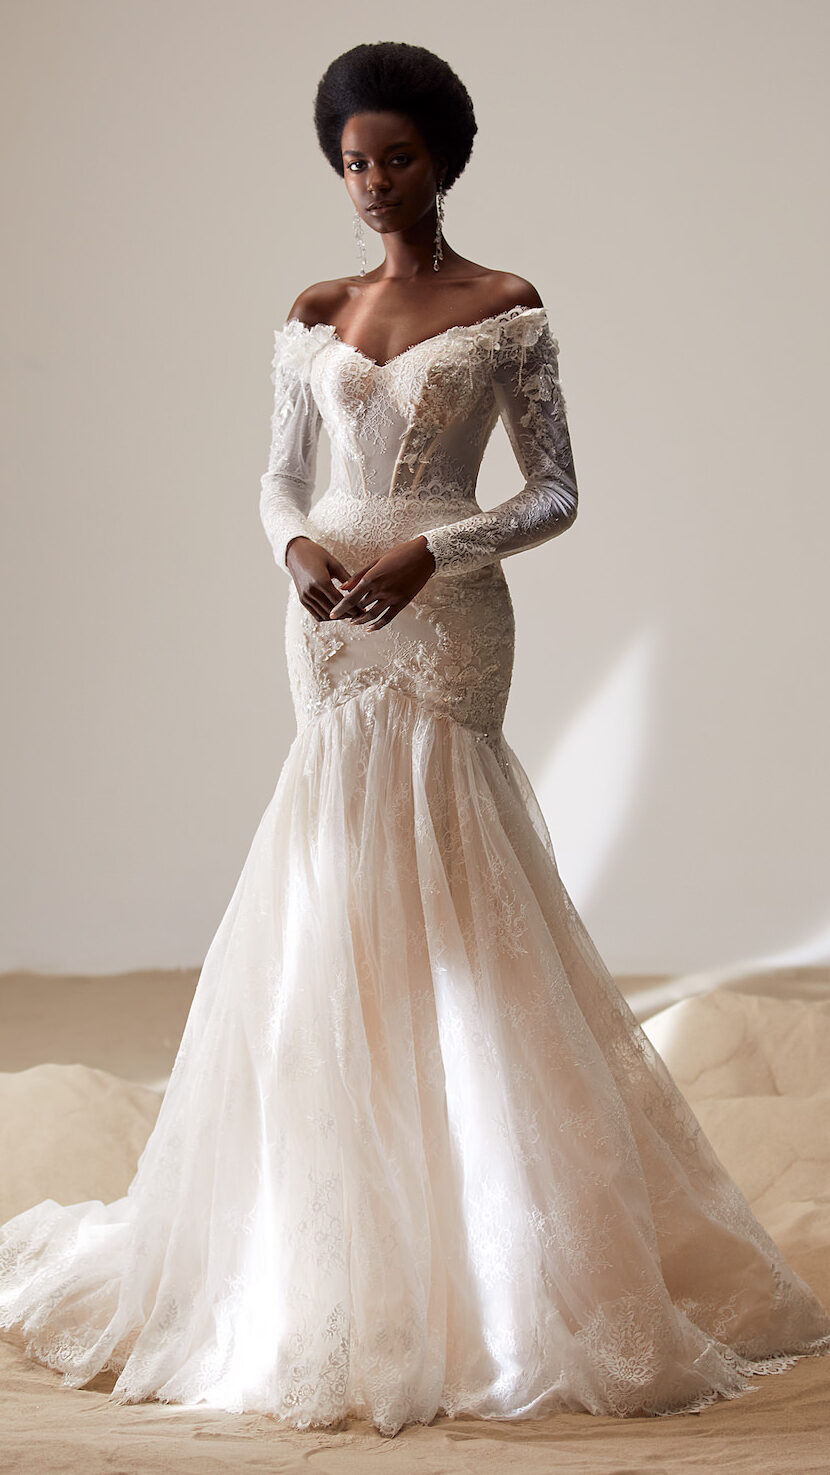 Hailey Bieber Wedding Dress by Milla Nova - Lola white lace